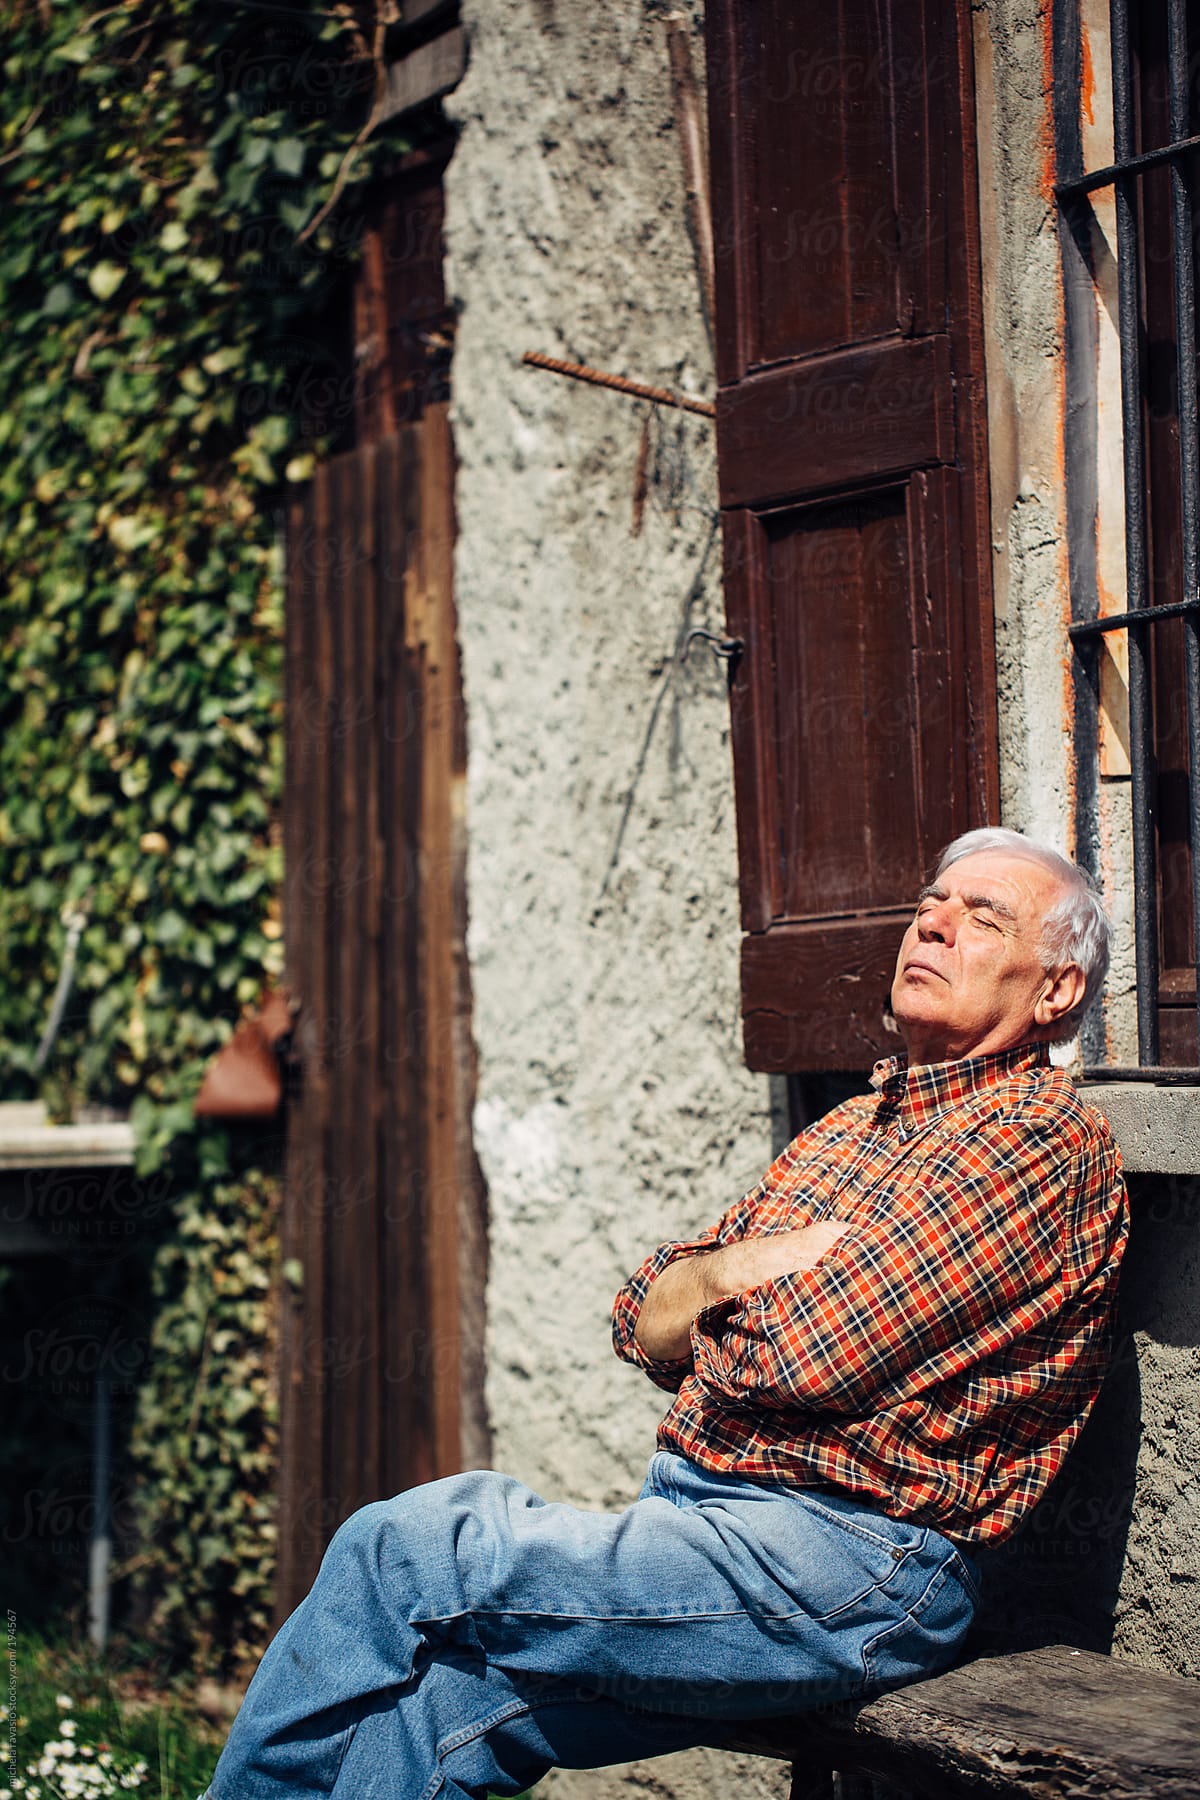 An elderly man sitting in the sun